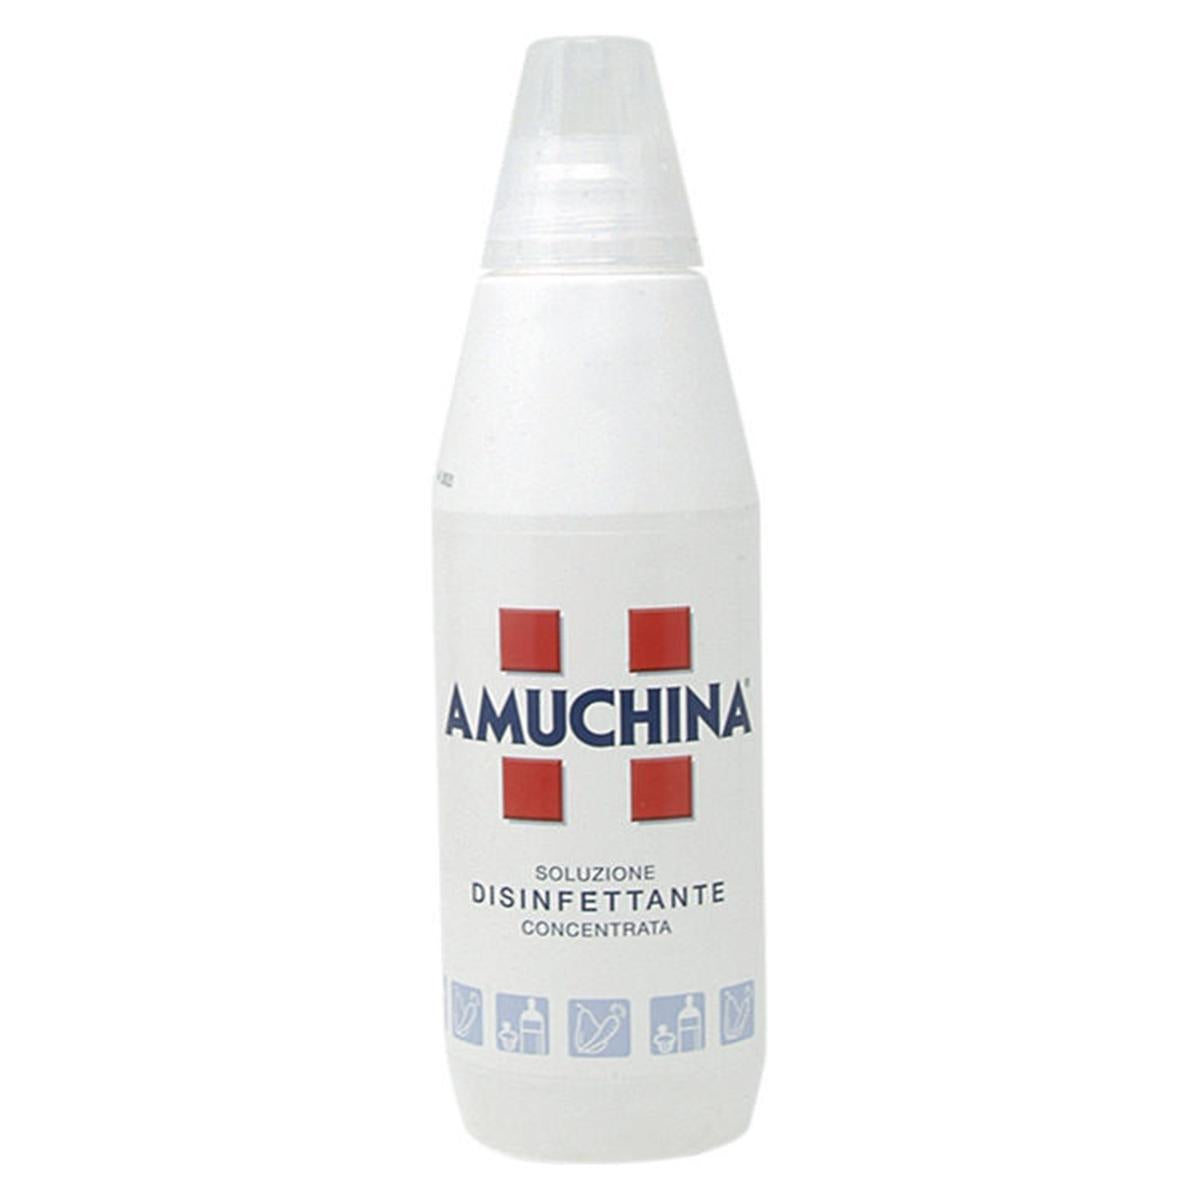 Amuchina 100% disinfettante 1 litro